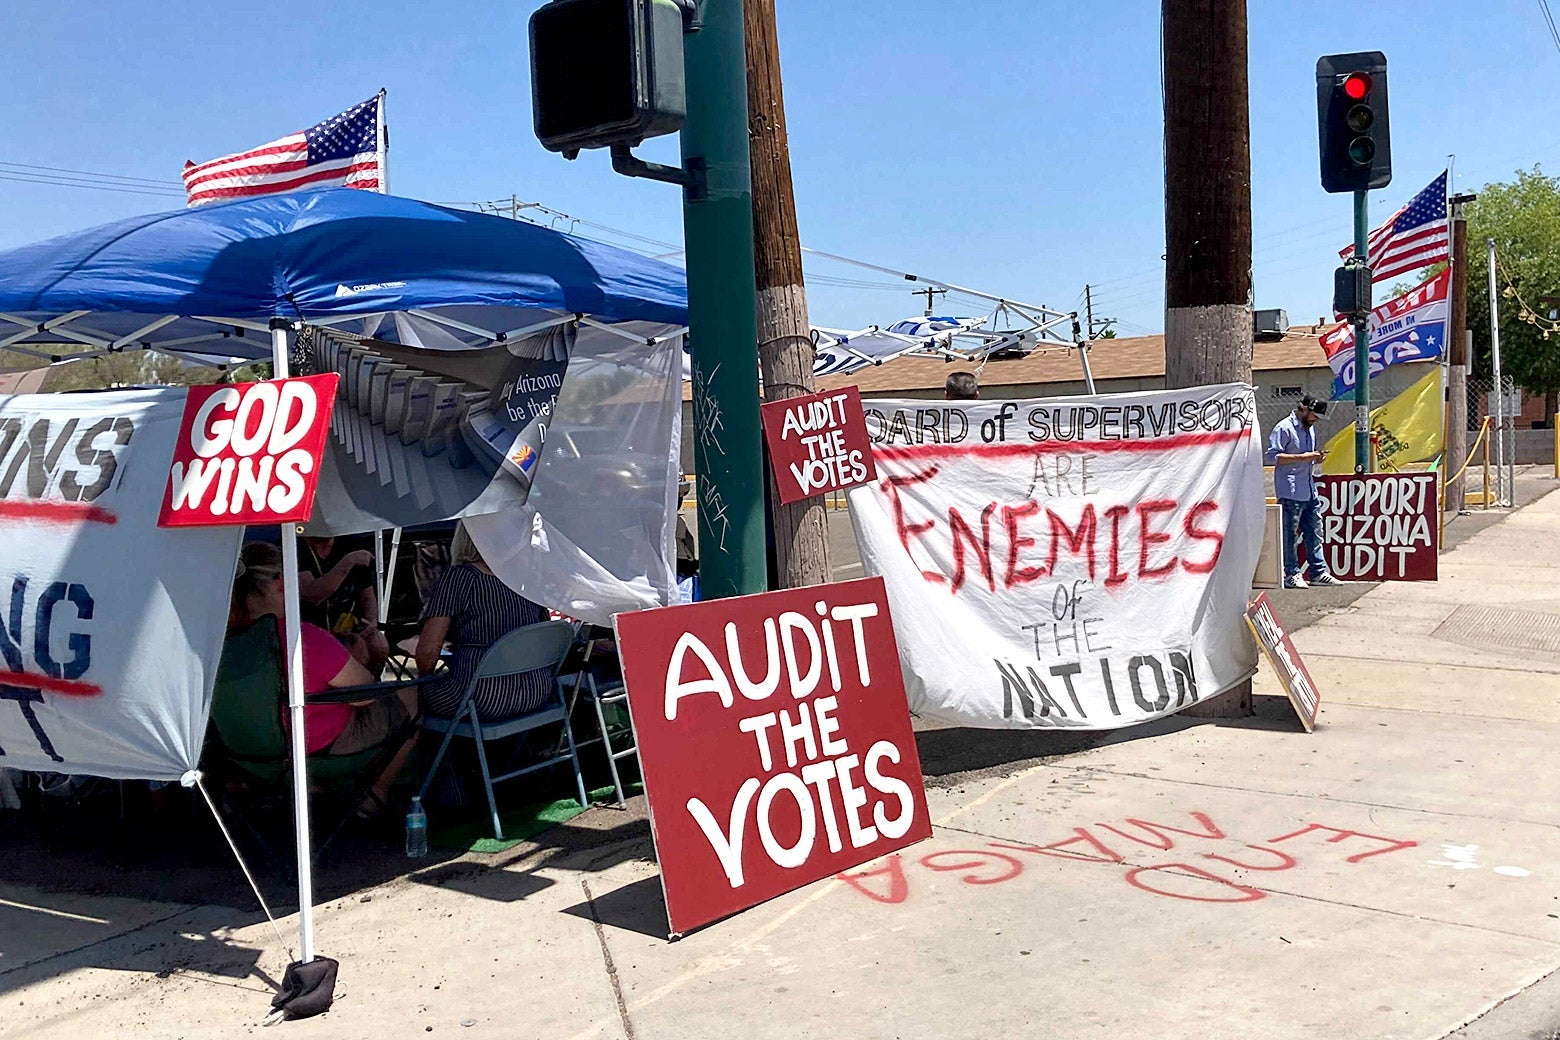 An encampment outsise of the Arizona ballot audit.